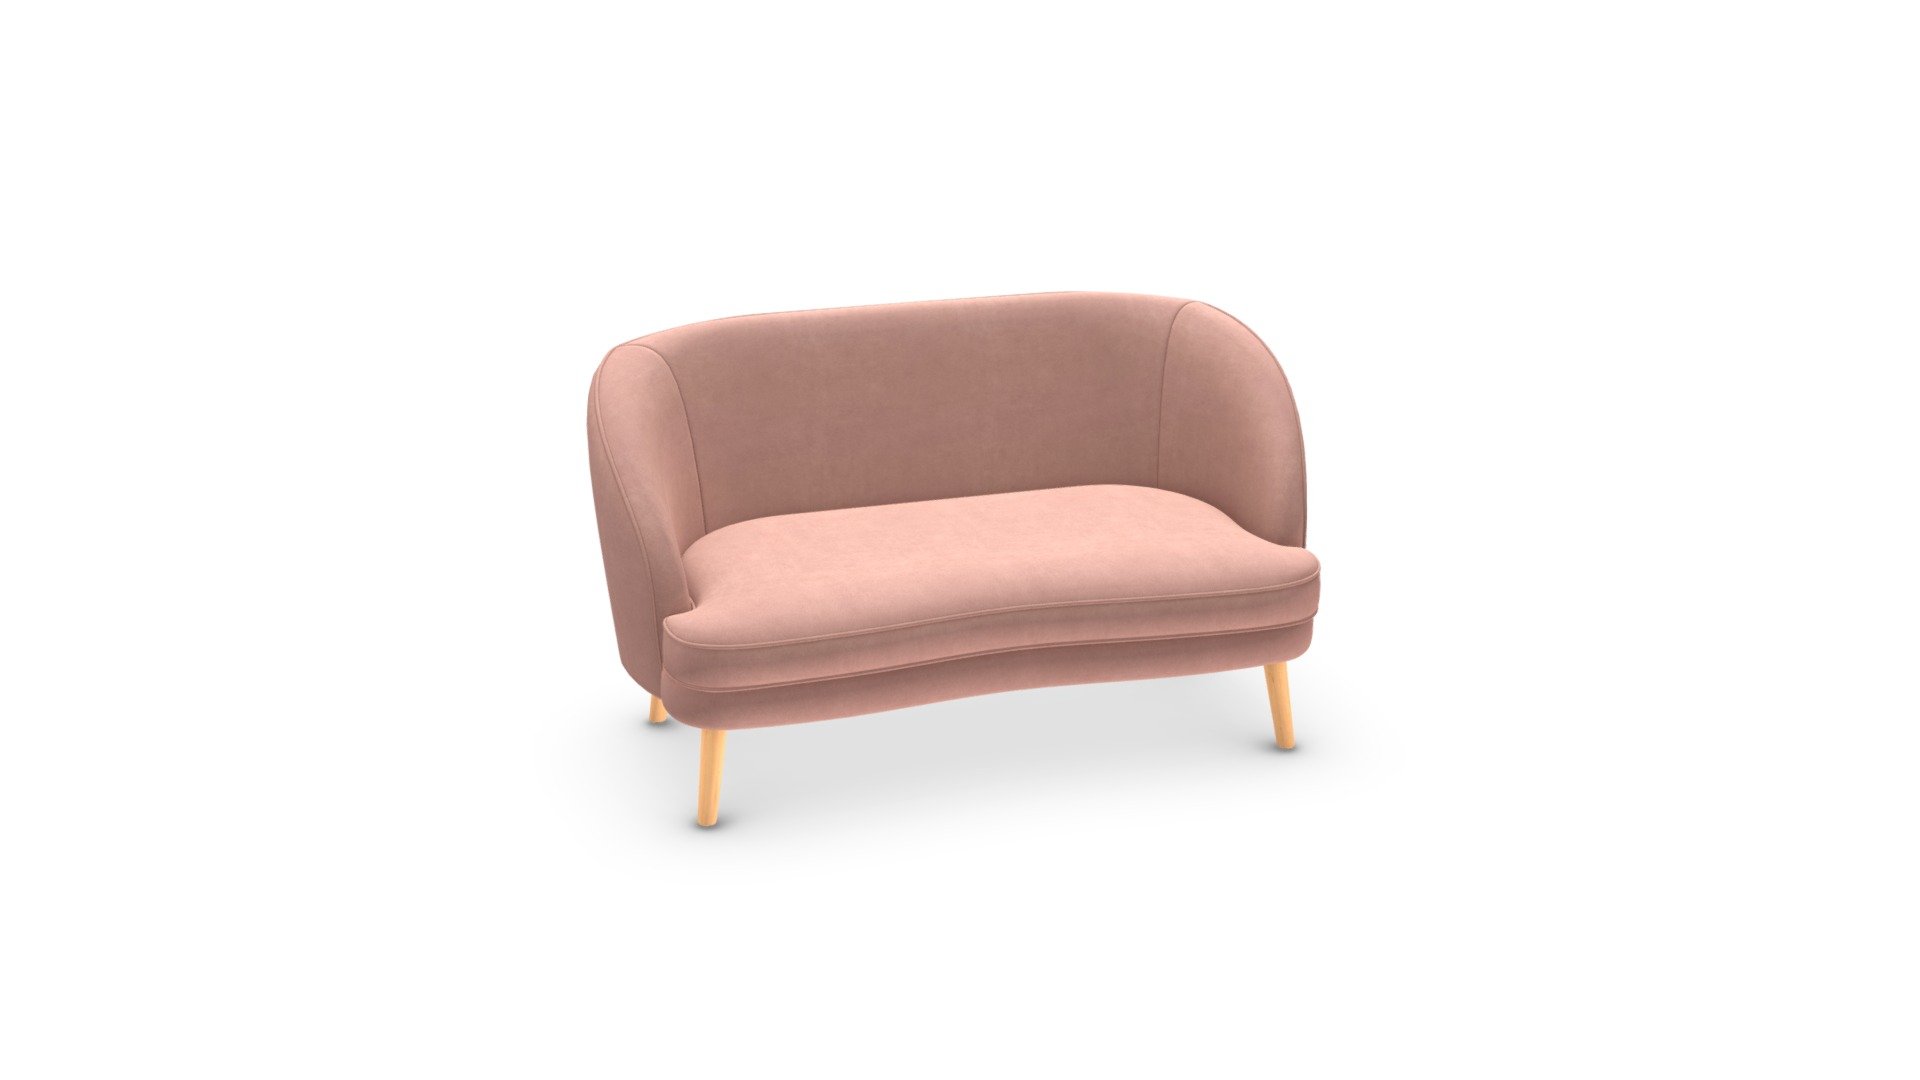 Gertie 2 Seater Sofa,Vintage Pink Velvet